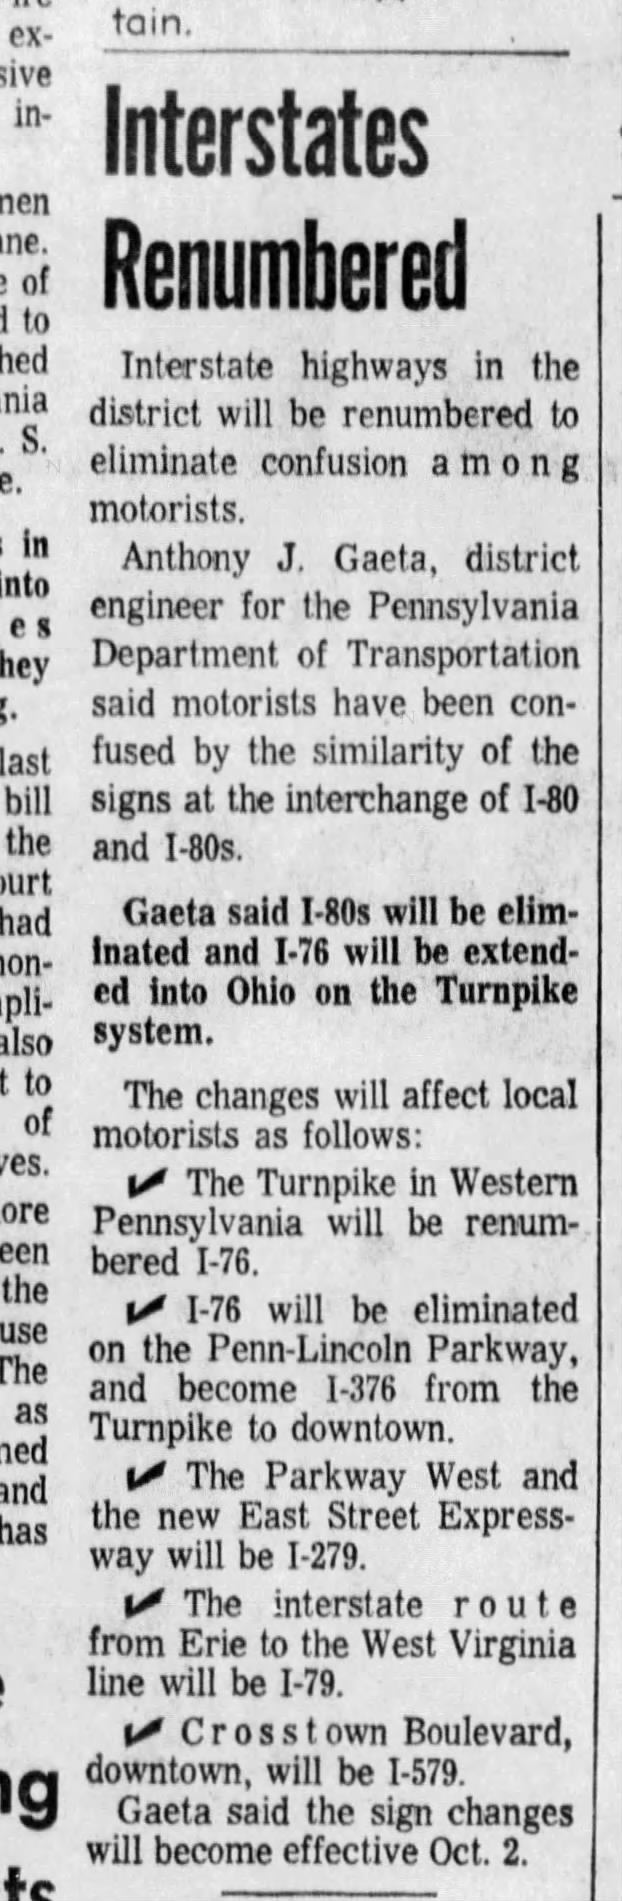 Interstates redone 10/2/72, February 24, 1972